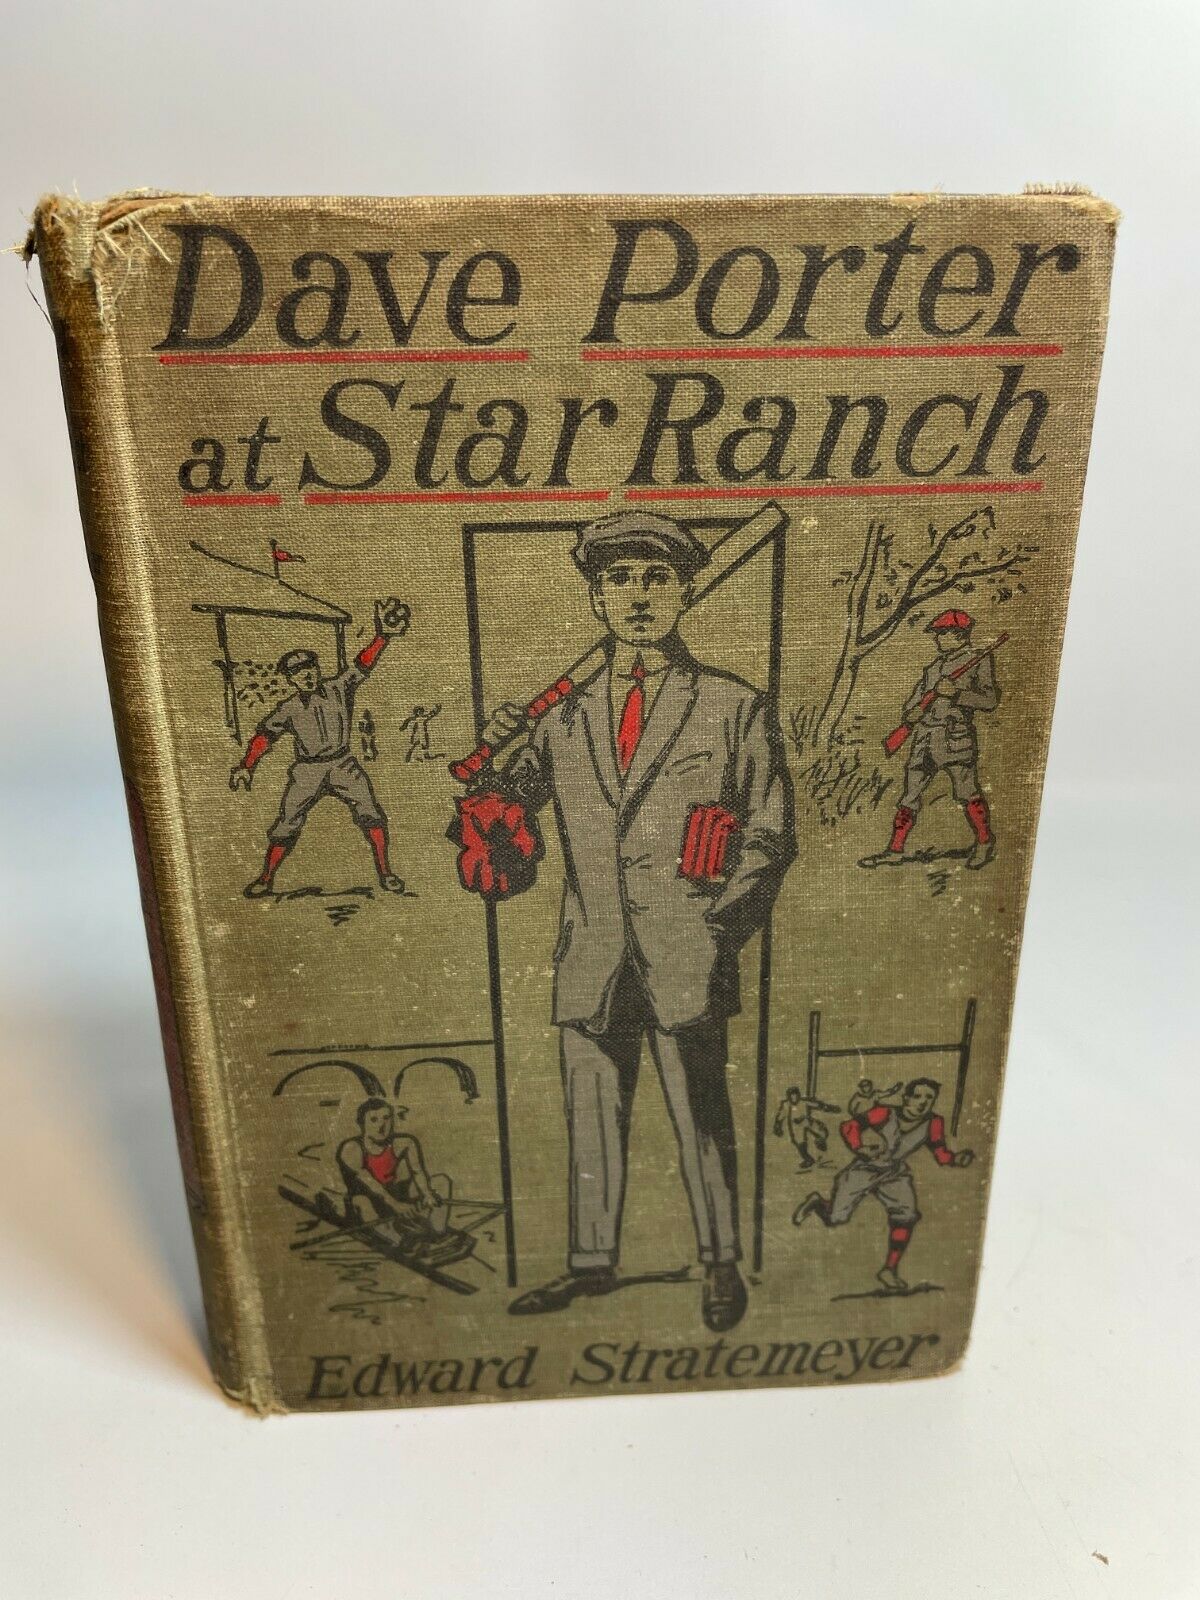 Dave Porter at Star Ranch, Edward Stratemeyer,1910, First Edition (B3)